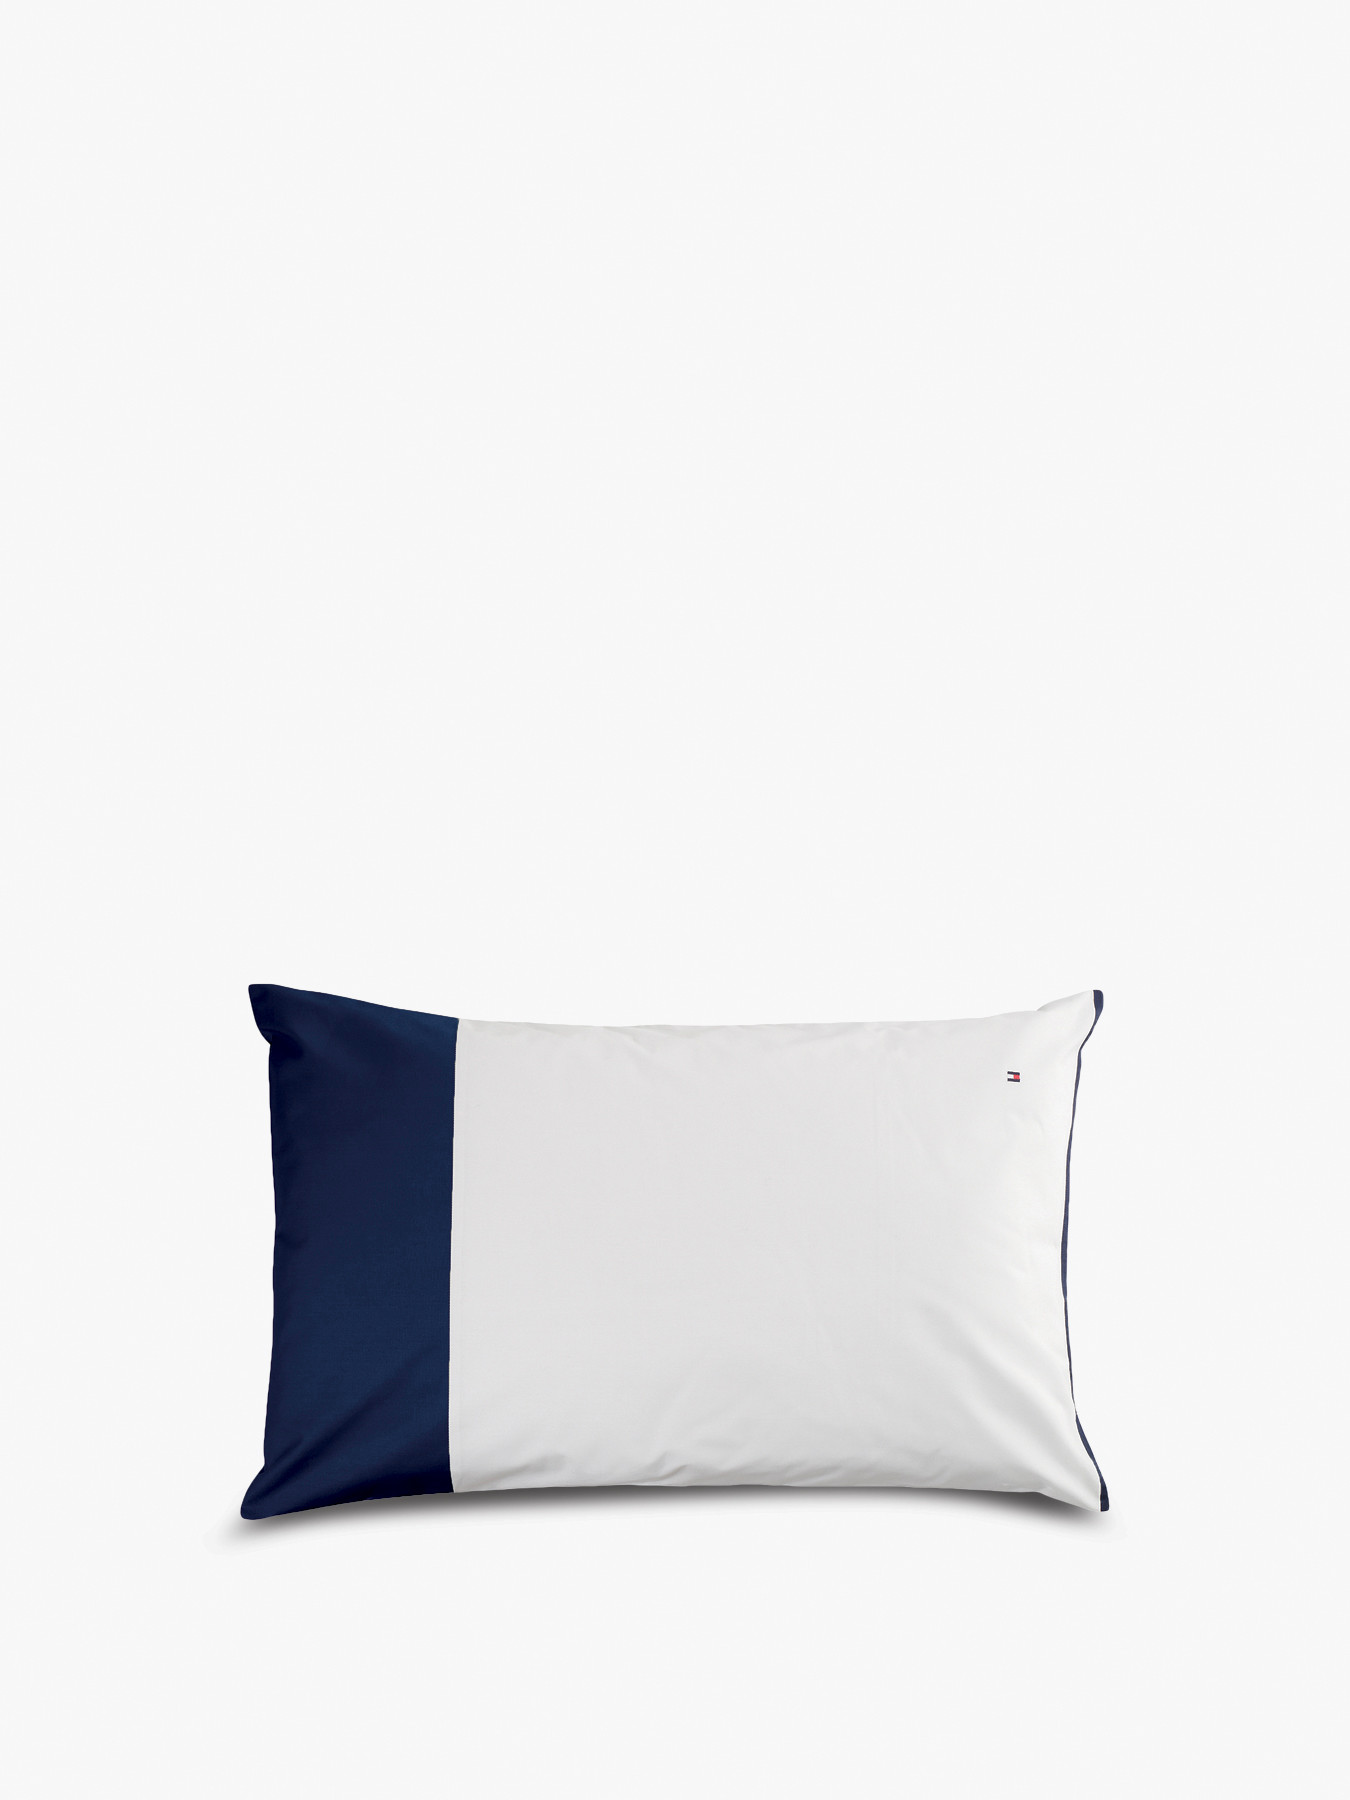 Tommy Hilfiger Tailor Standard Pillowcase Navy Pillowcases Fenwick